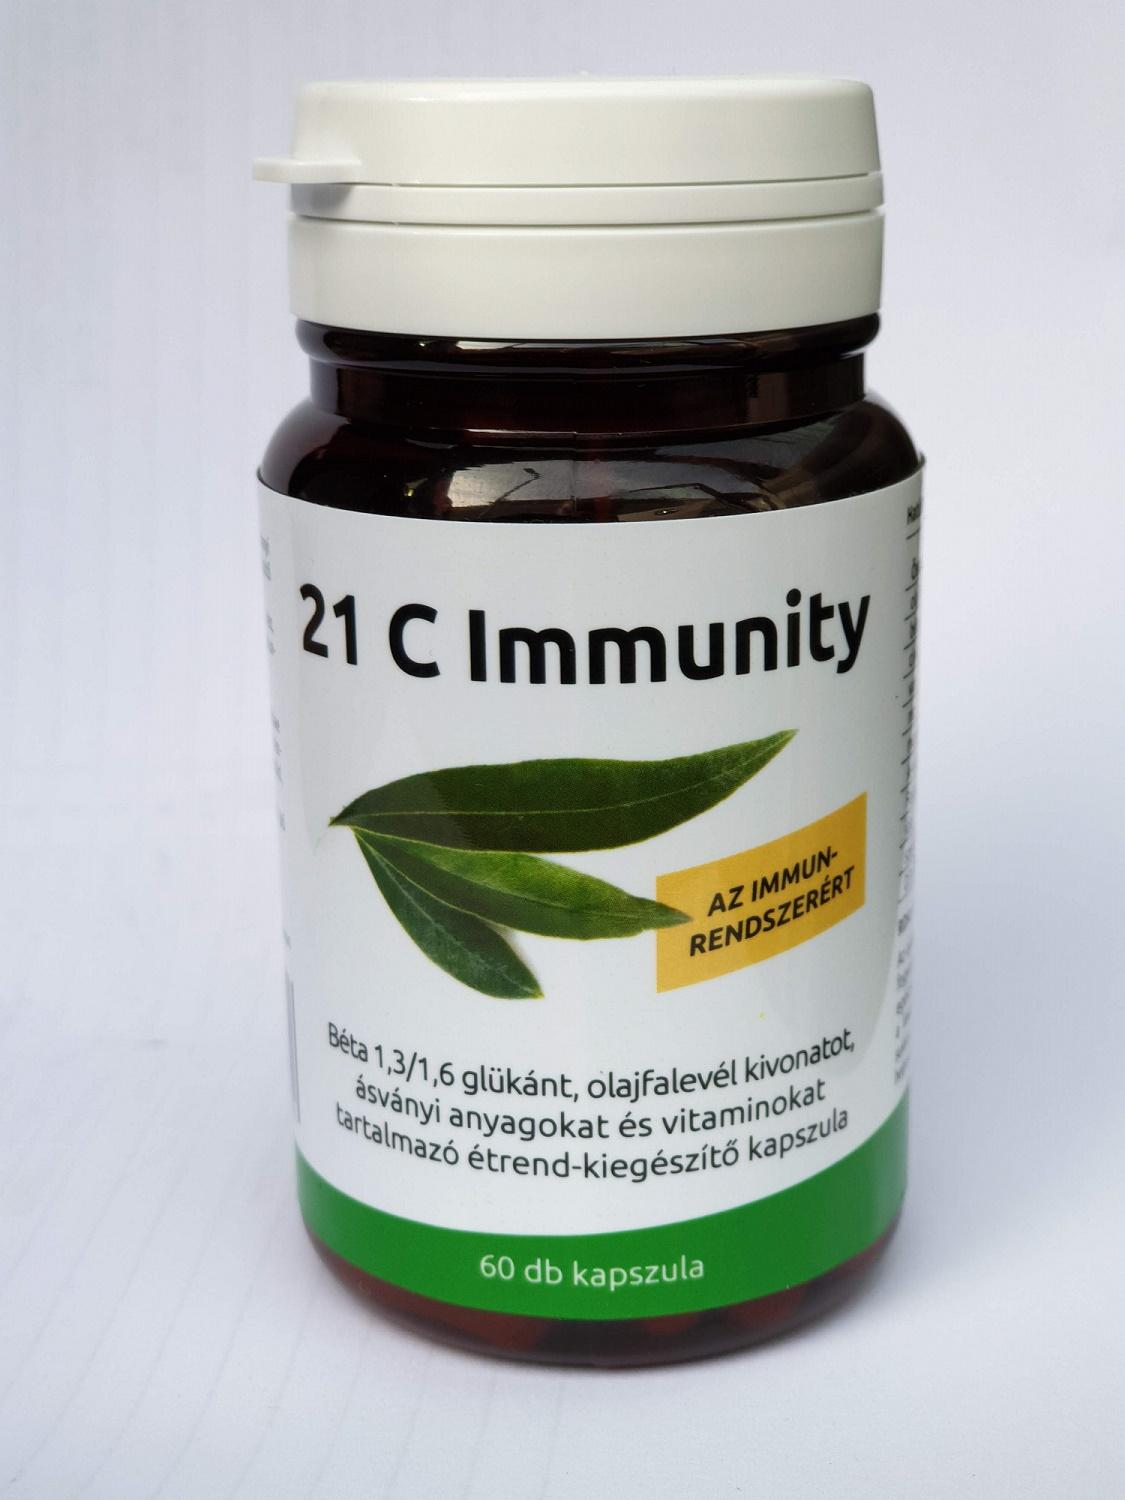 21 C Immunity kapszula 60 db